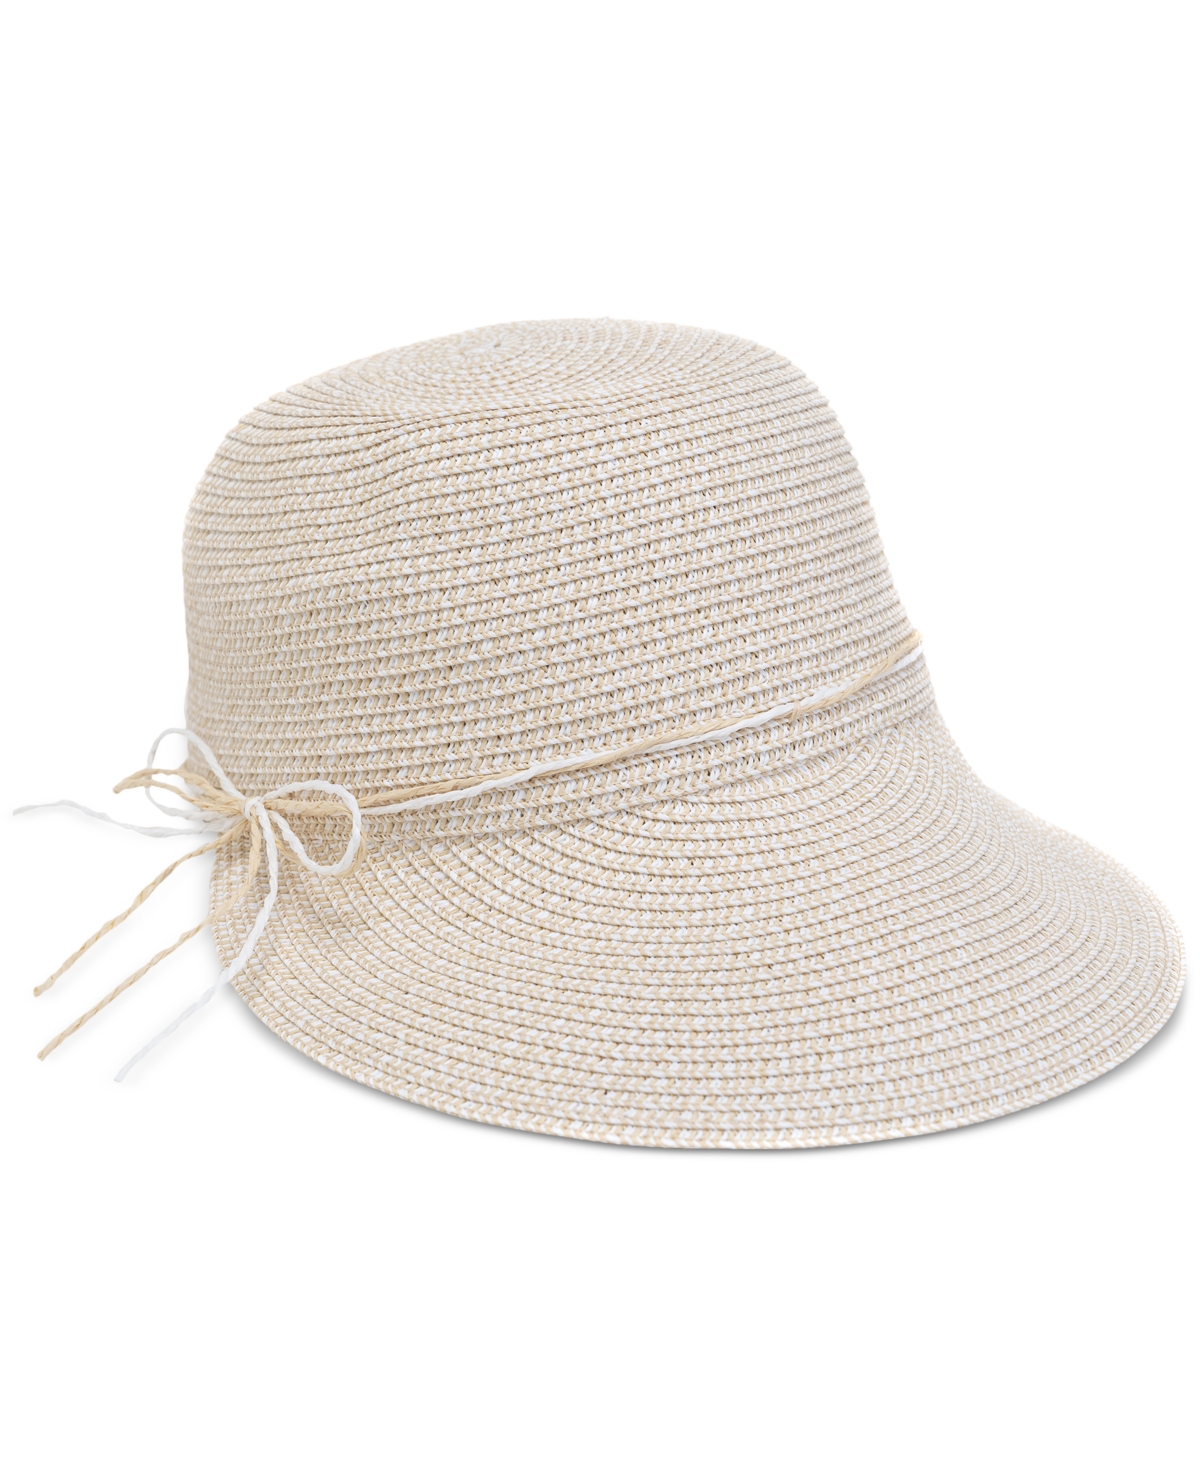 Women's Packable Paper Framer Hat, Created for Macy's - White